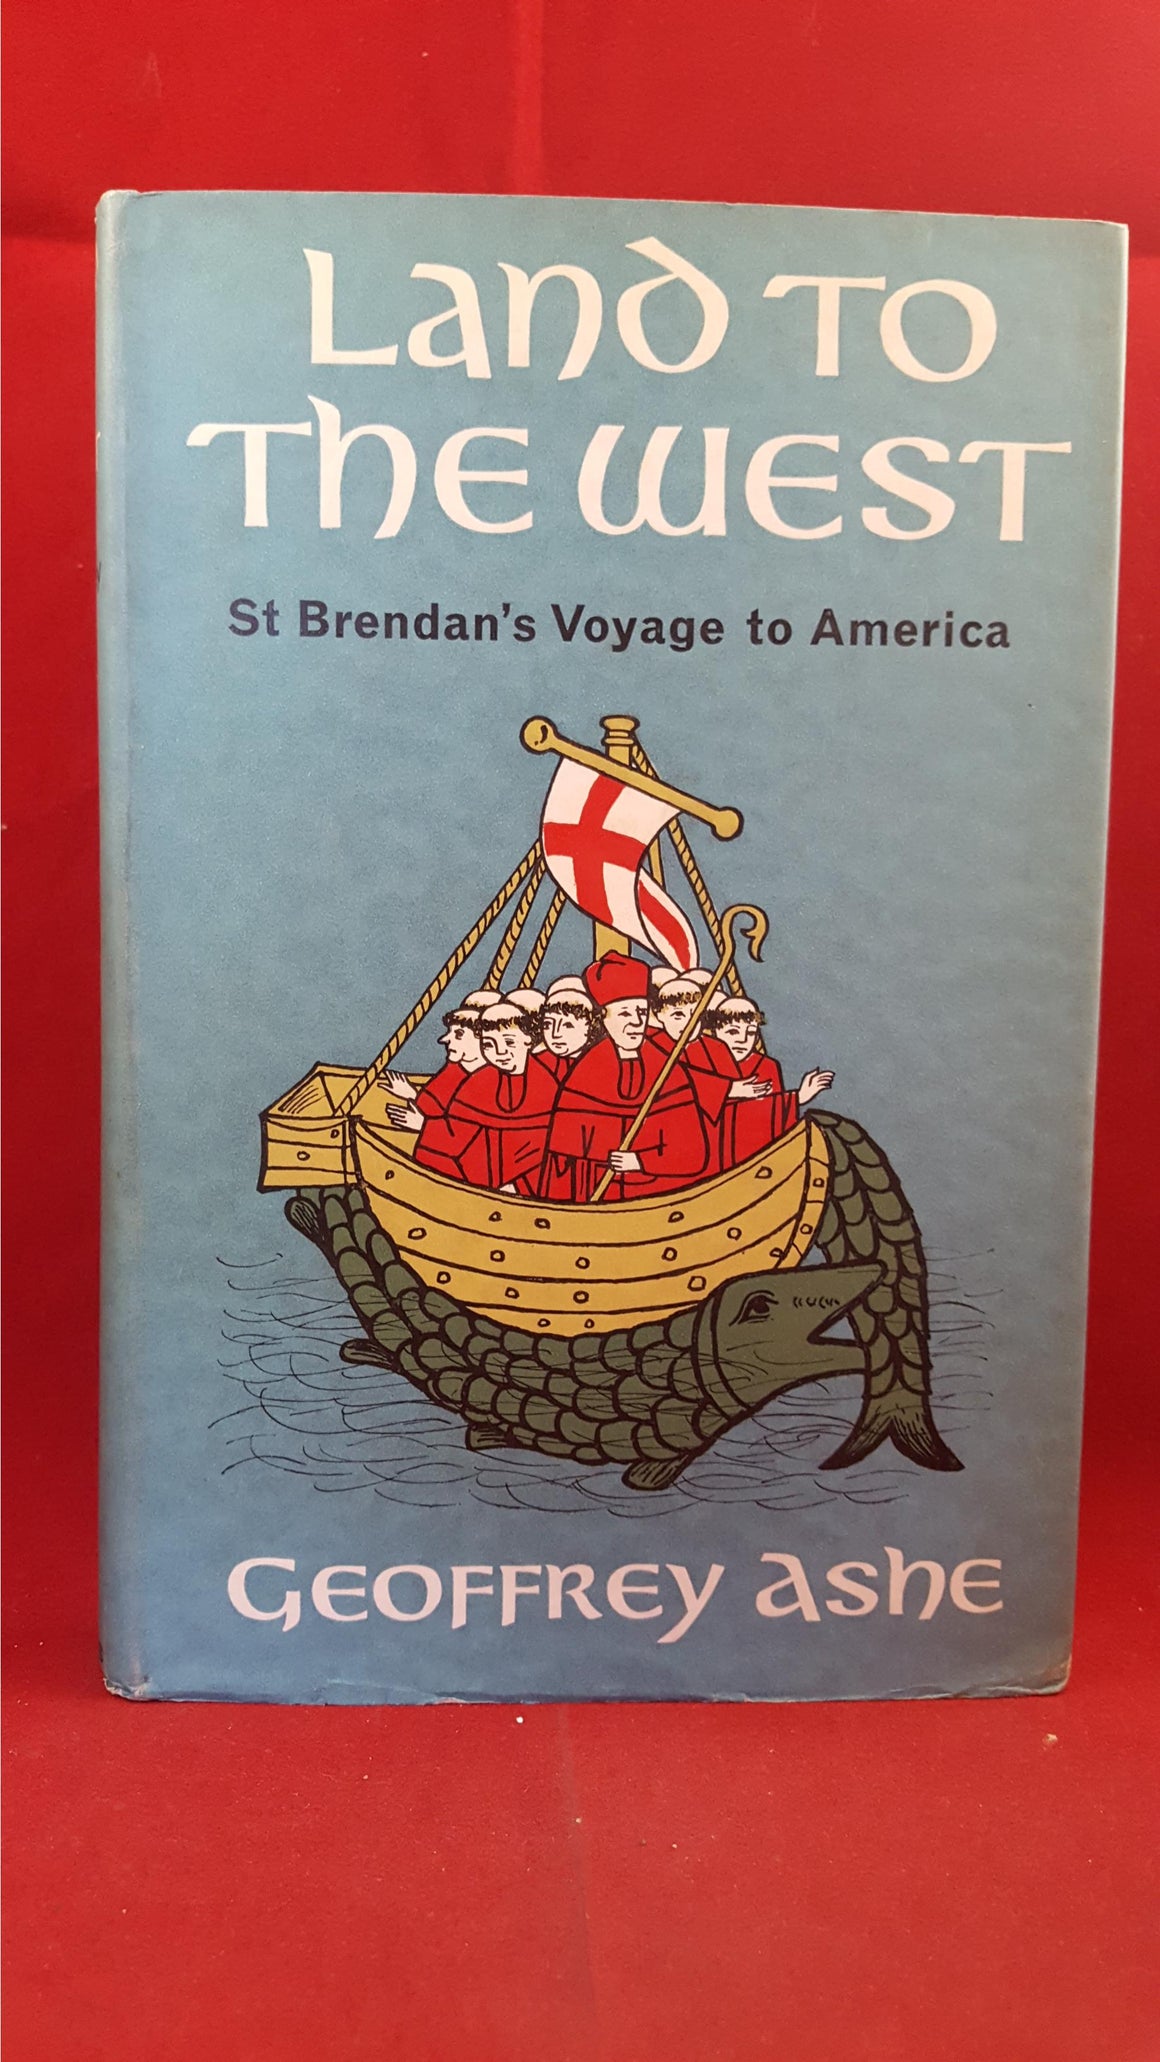 st brendan's voyage to america